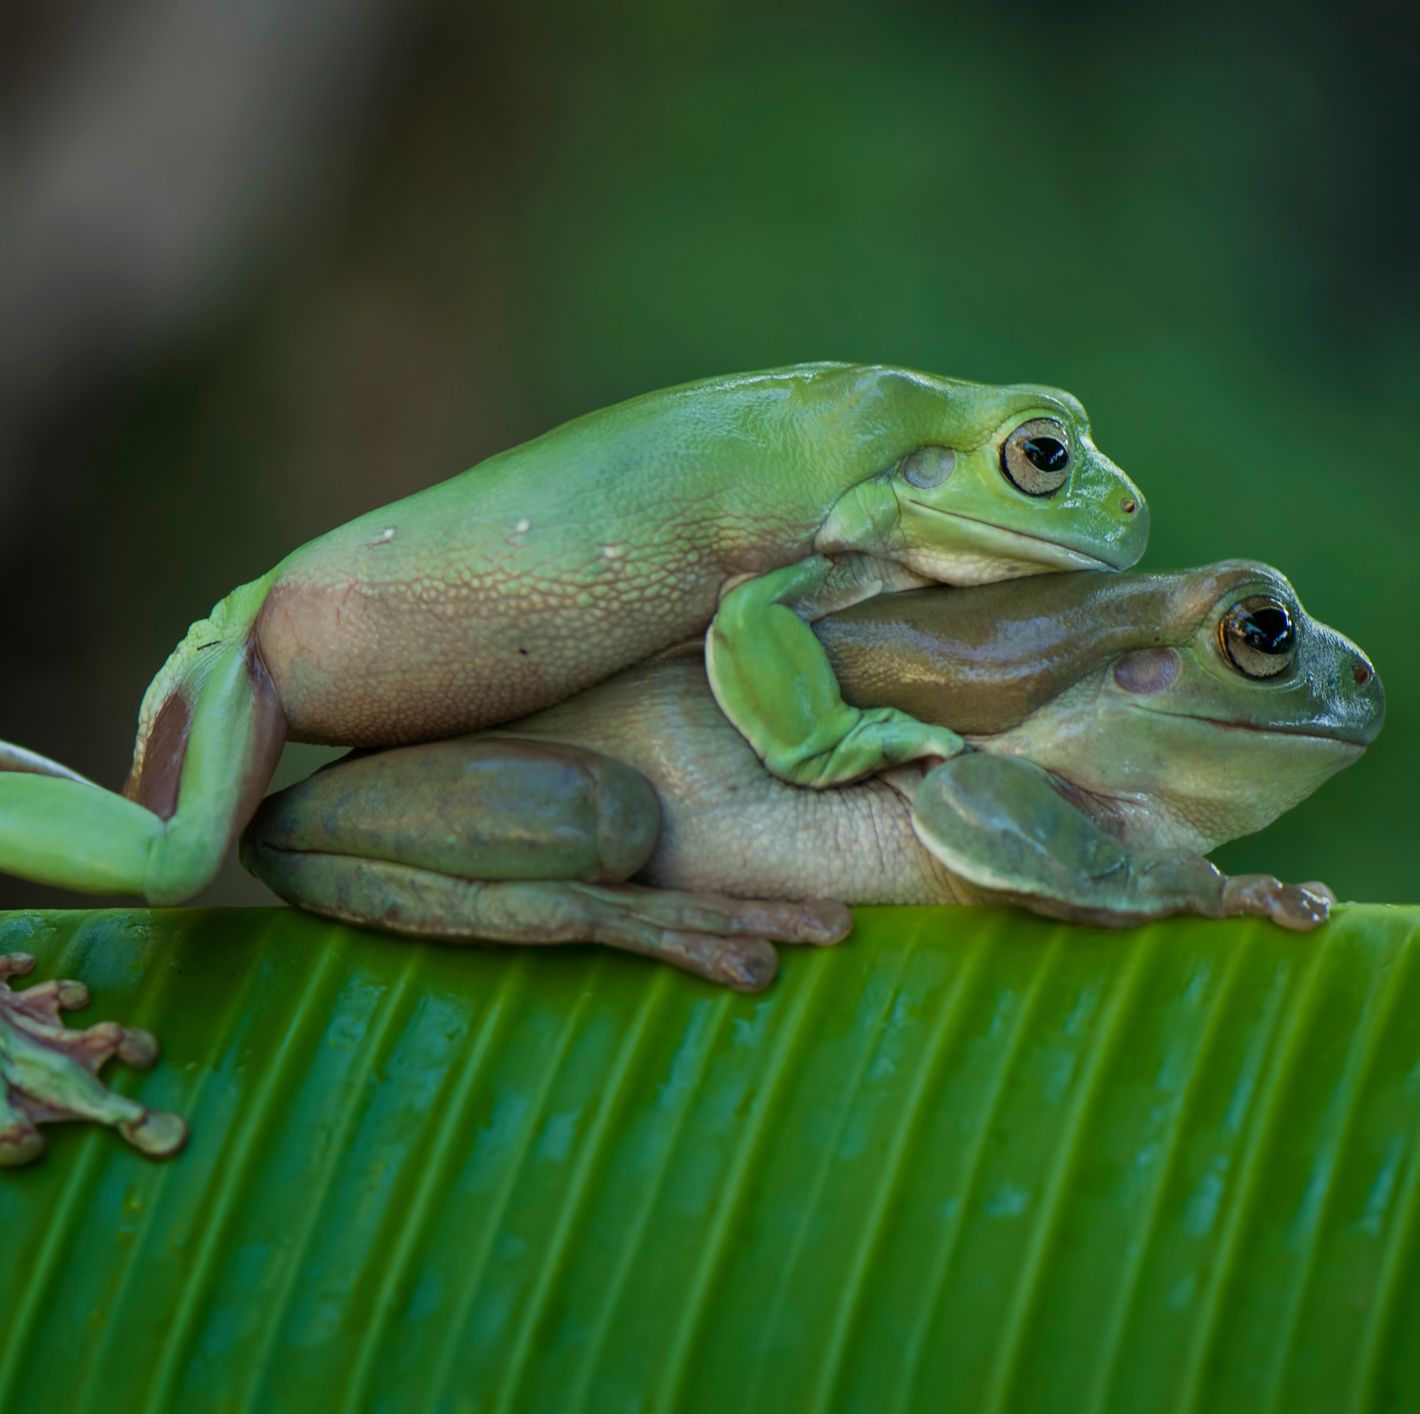 arlen narvaez recommends frog leap sex position pic